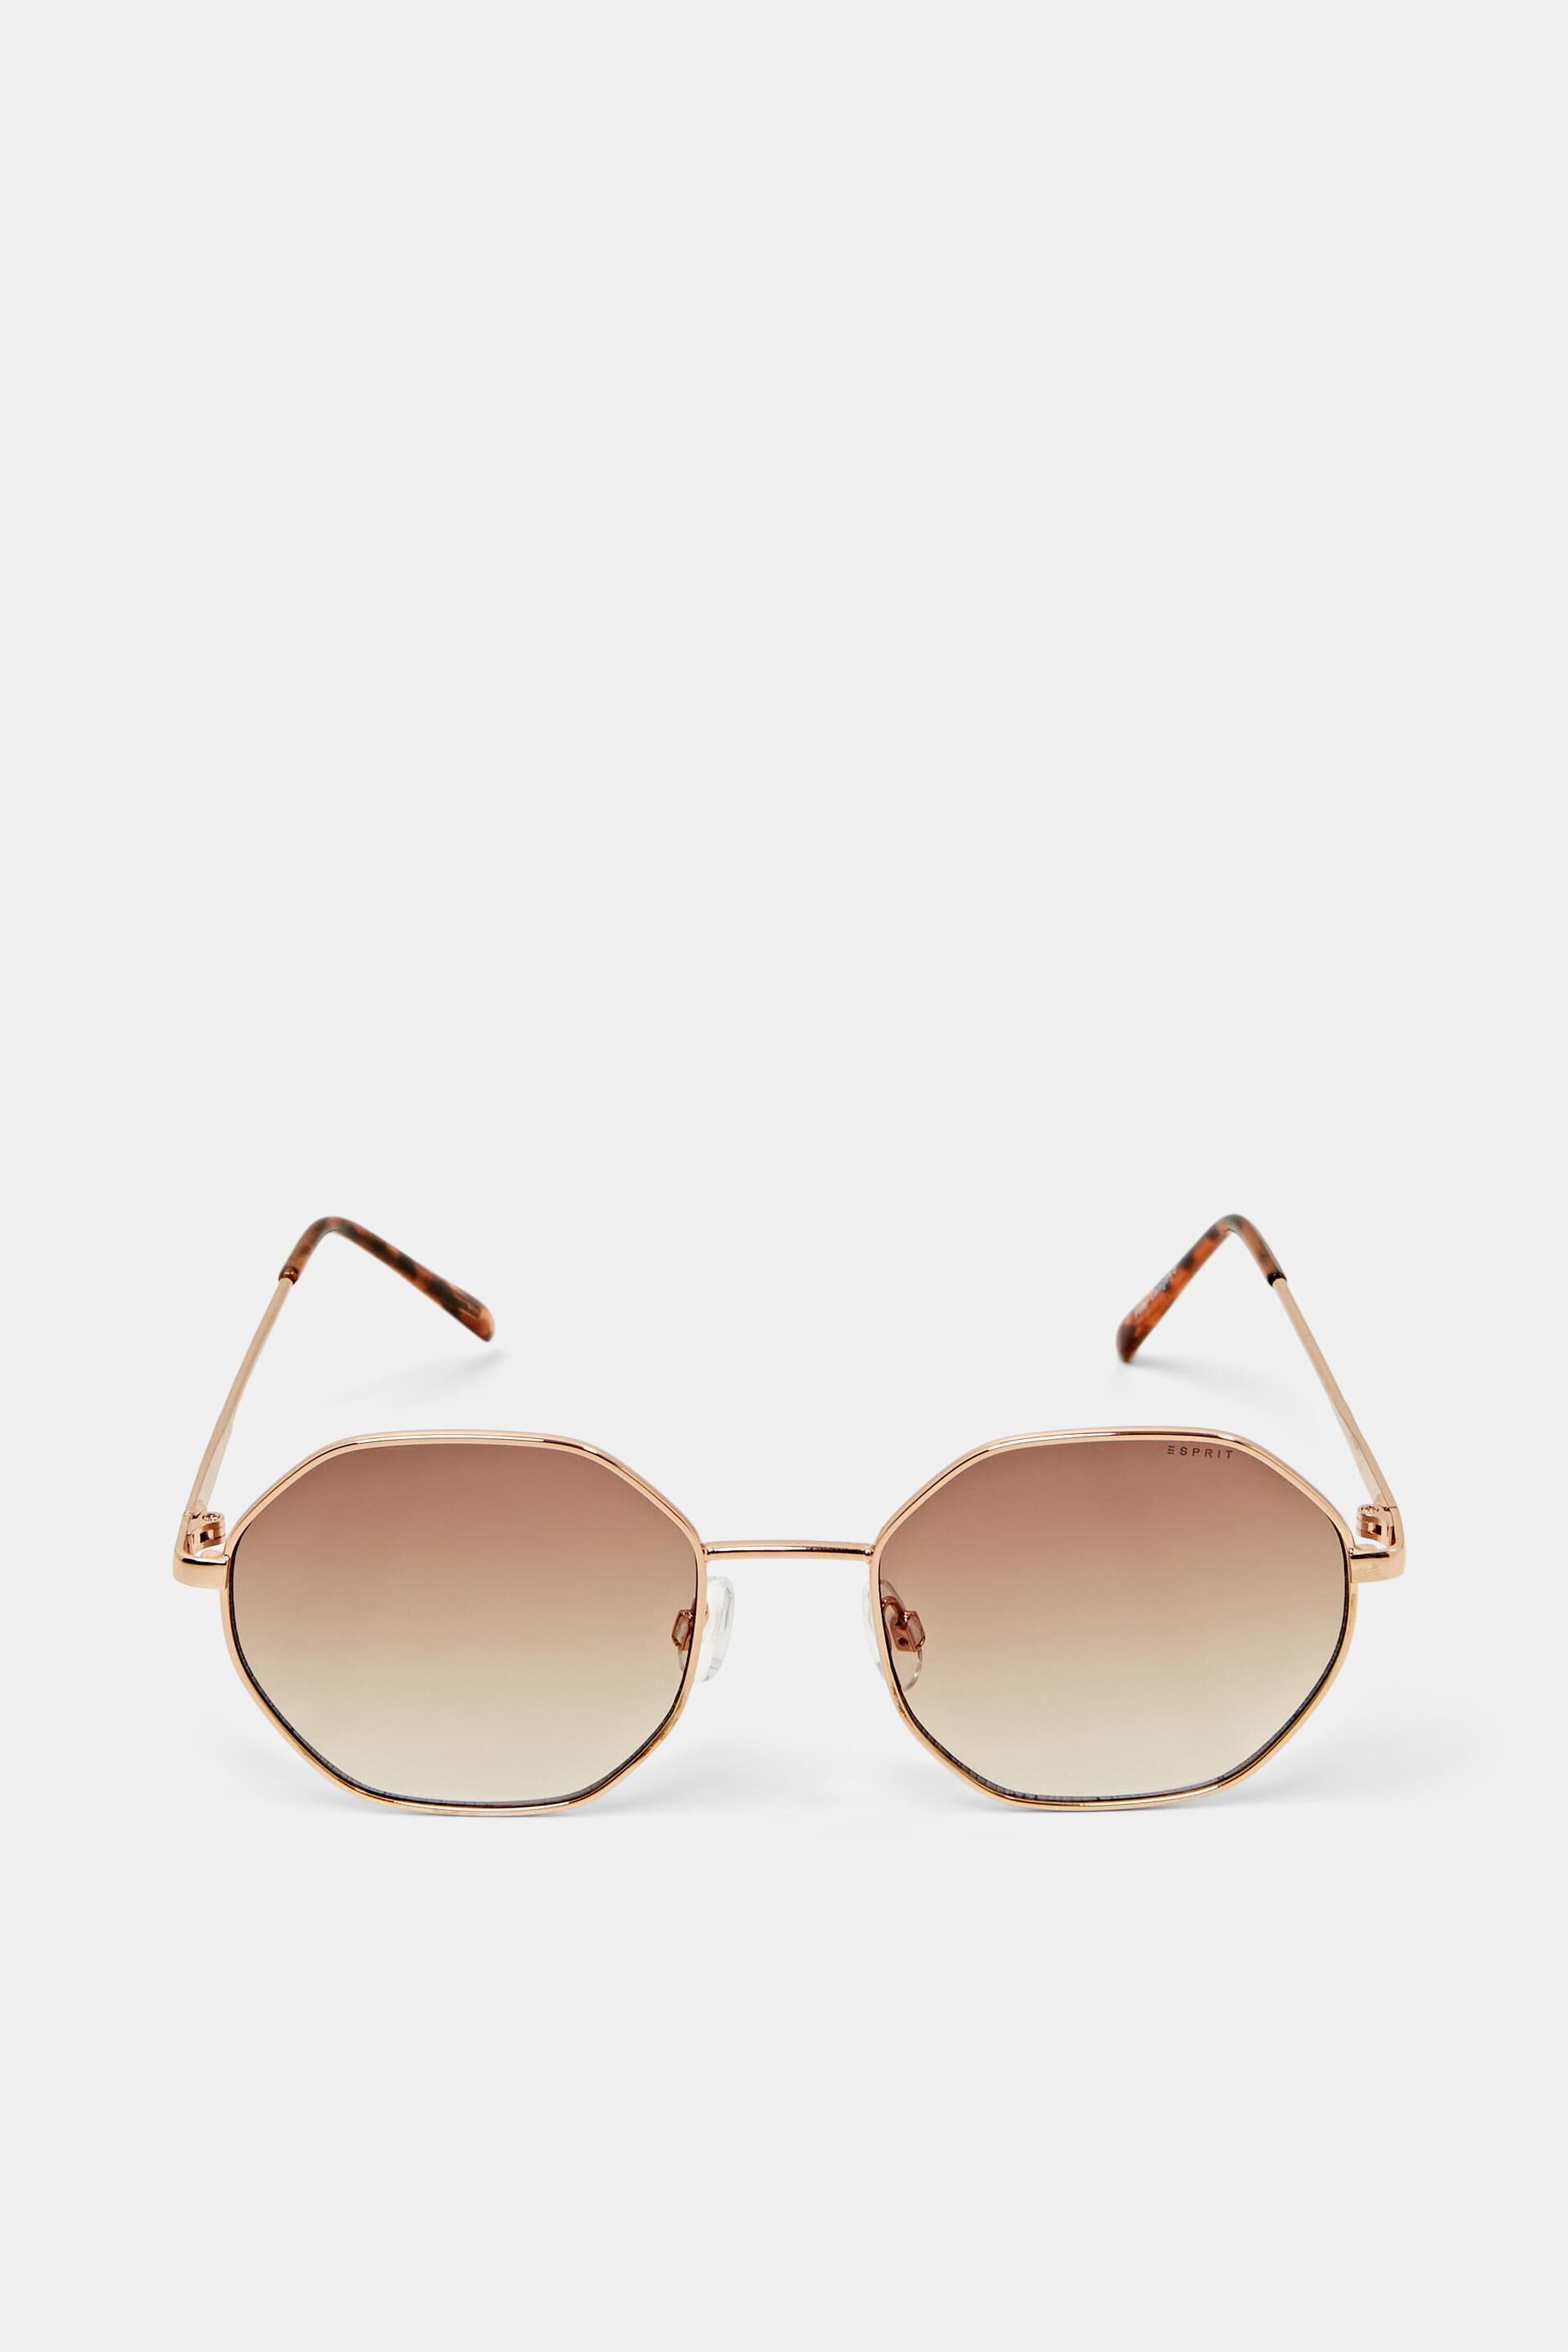 Esprit frame with filigree metal gold Sunglasses